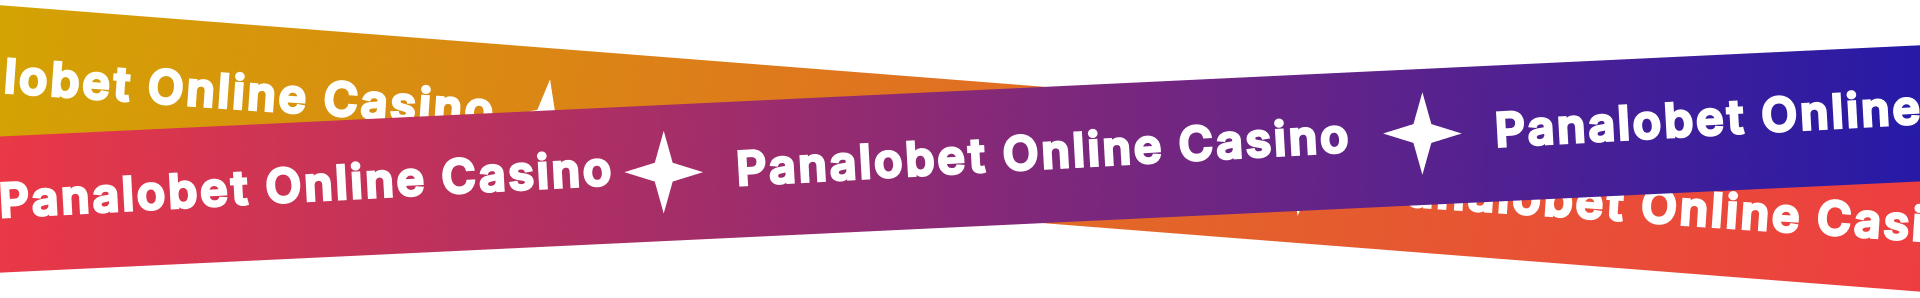 Panalobet online casino